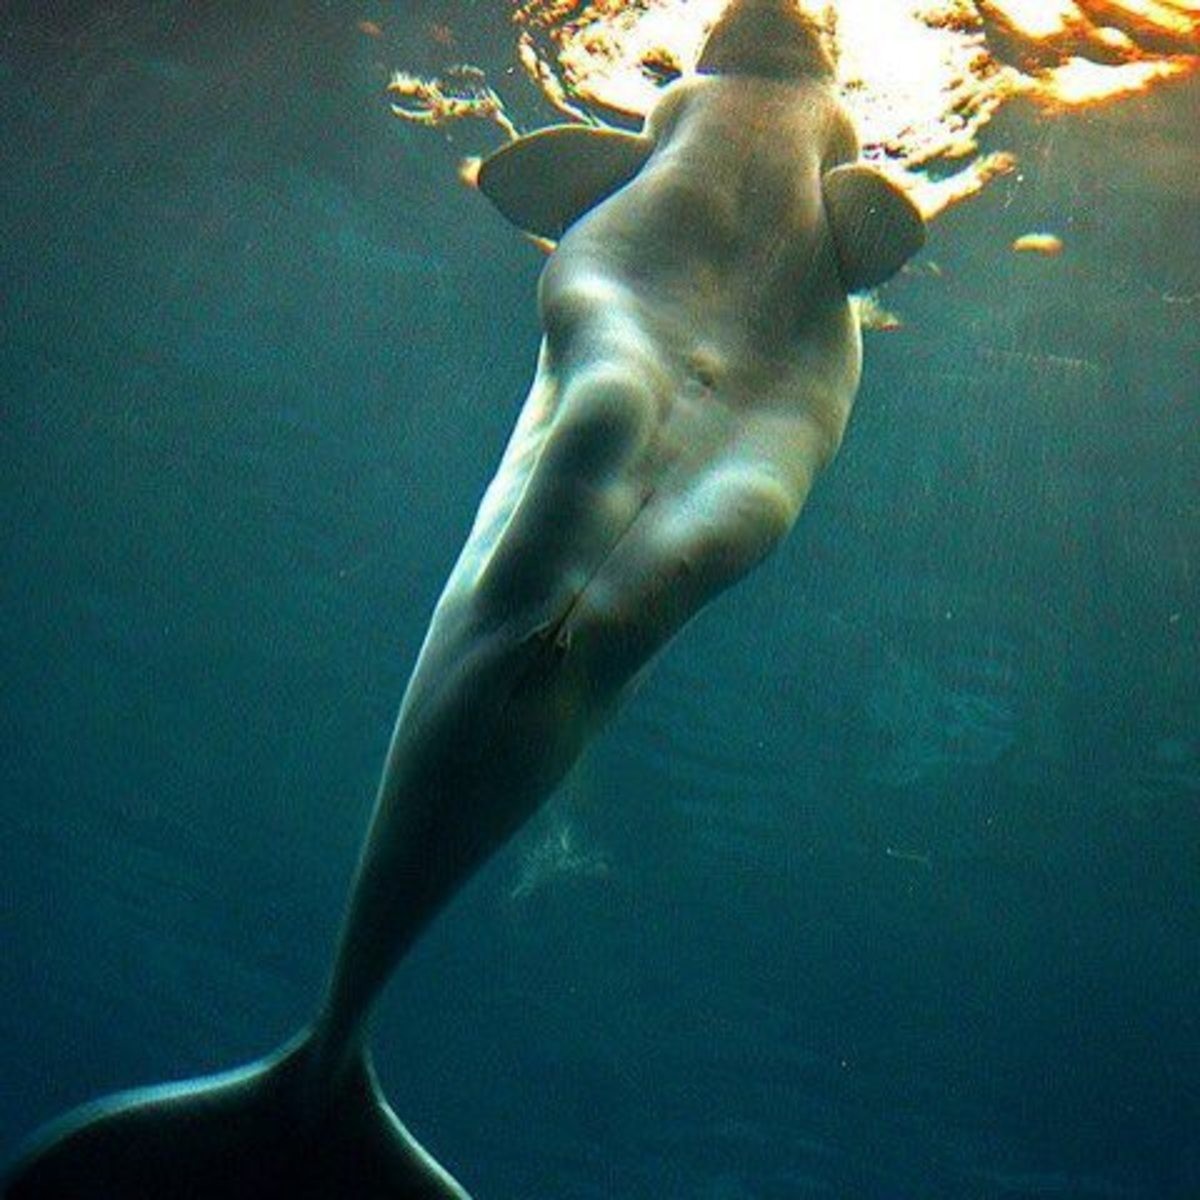 Probably why beluga whales were mistaken as mermaids.